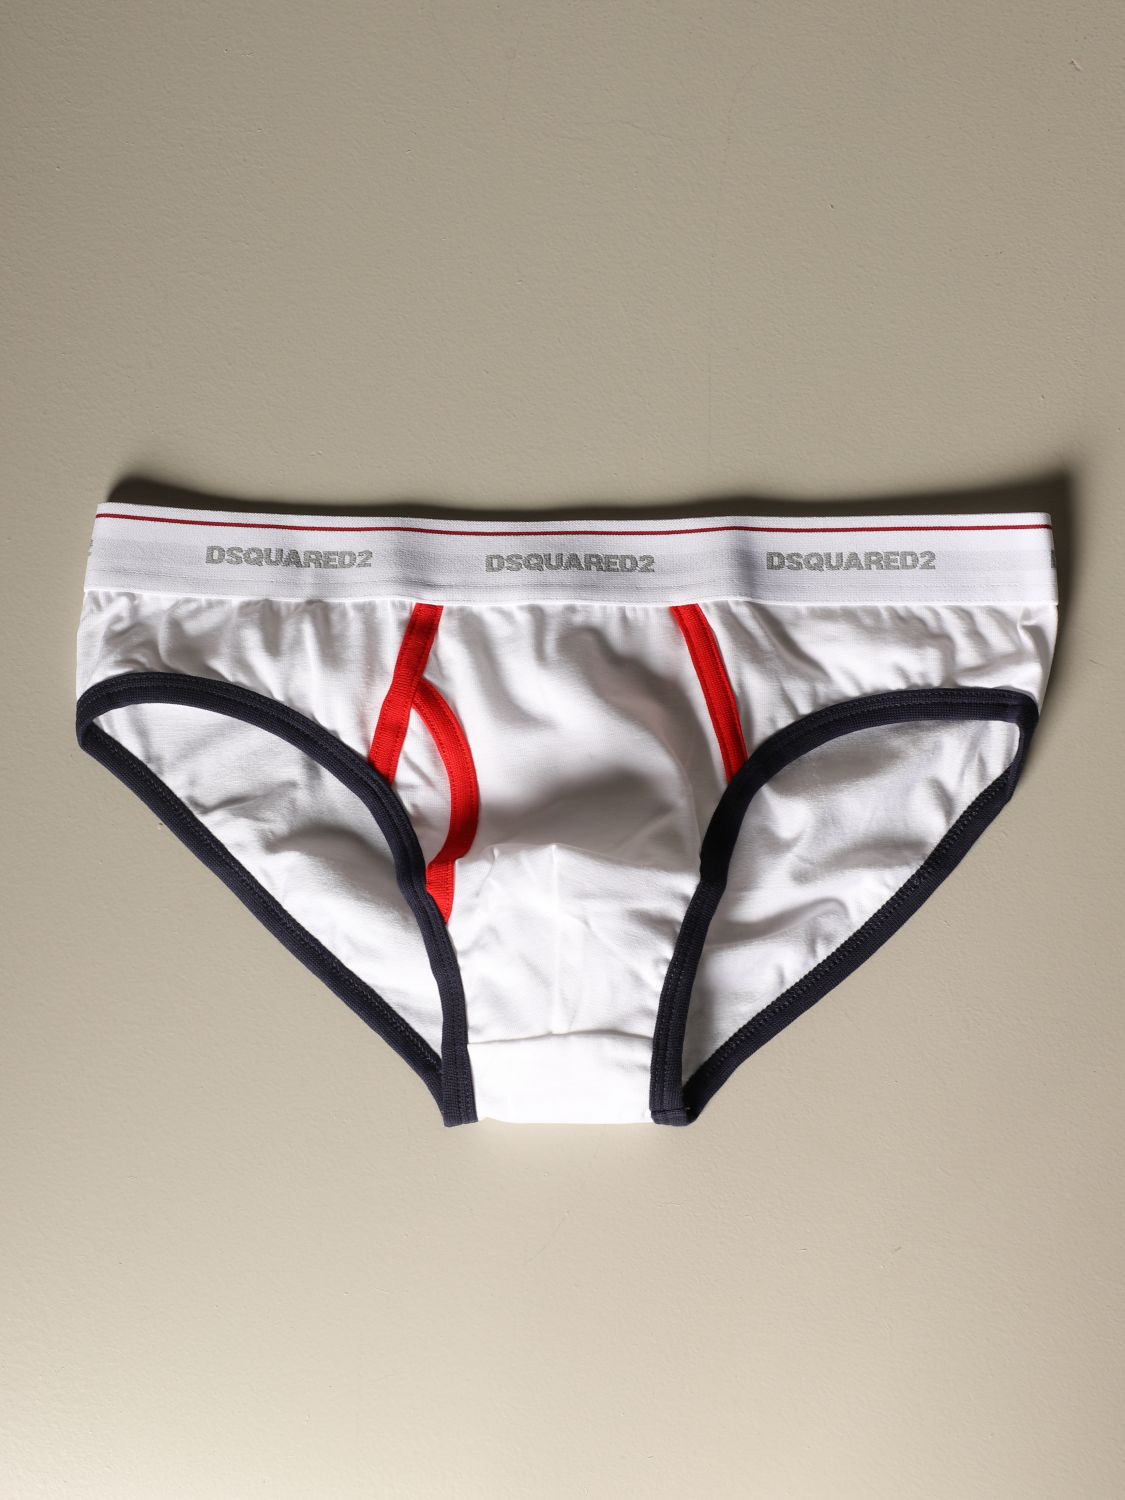 dsquared underwear uk